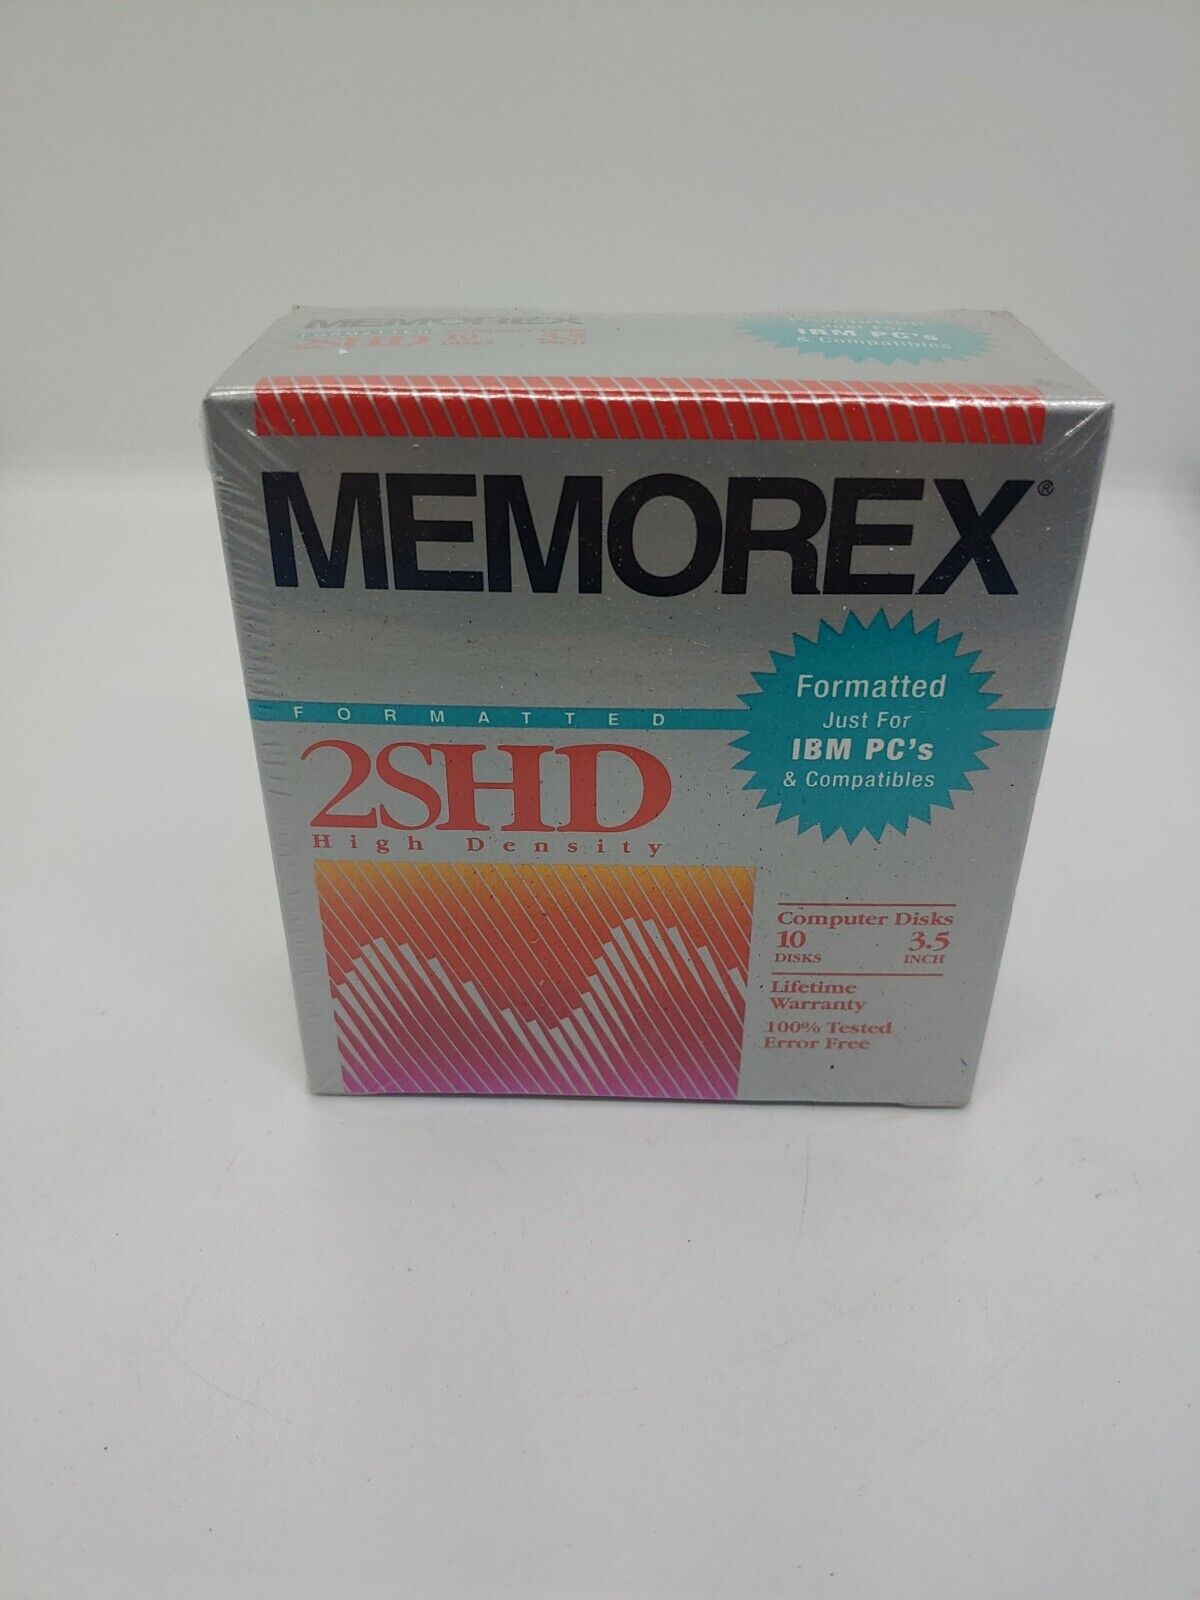 Memorex 2SHD Formatted IBM COMPUTER Disks 3.5 10/Box. F8